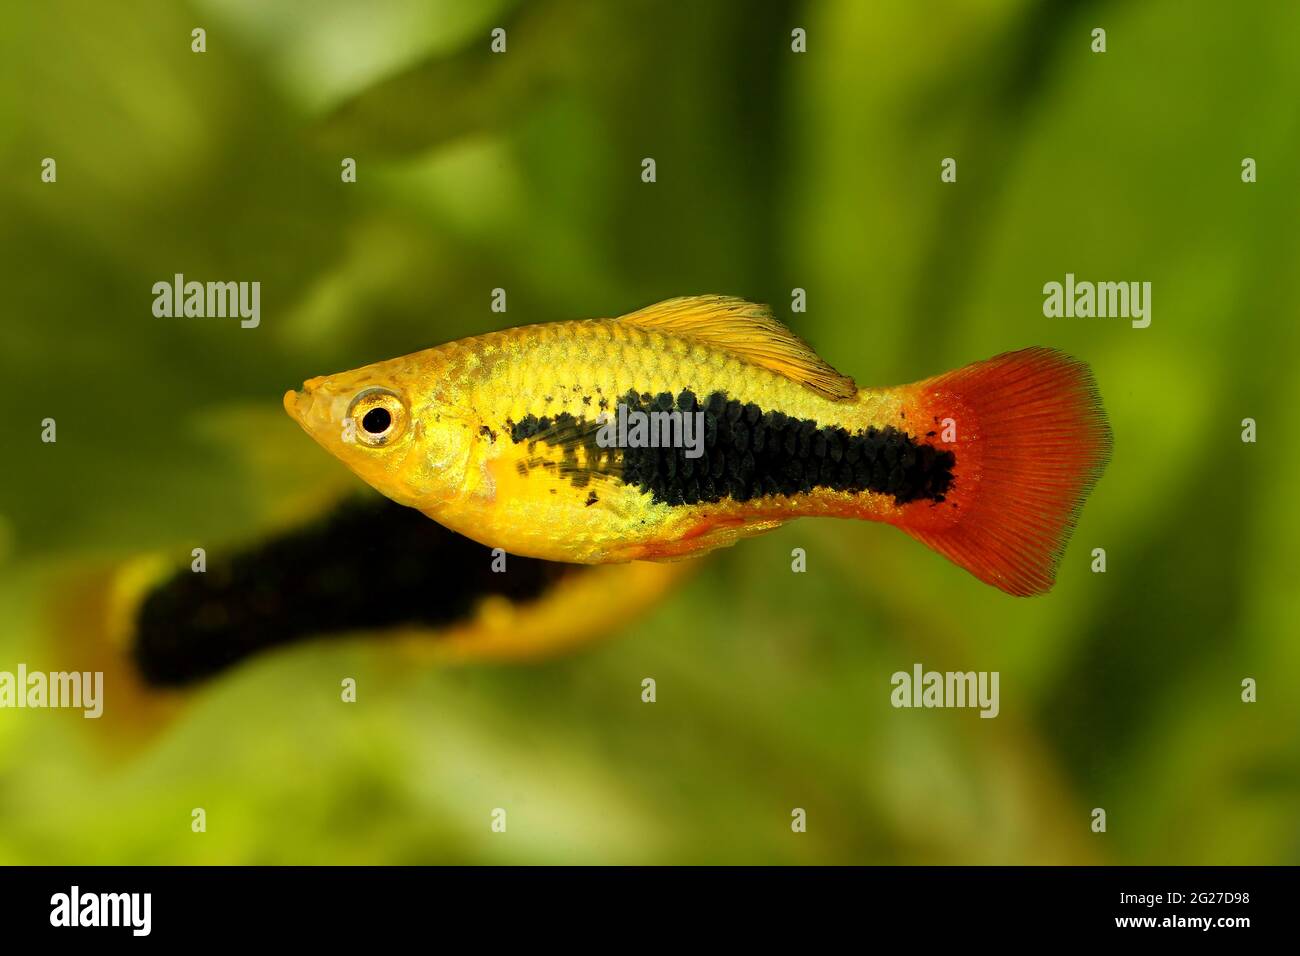 sunburst platy male Xiphophorus maculatus tropical aquarium fish Stock Photo